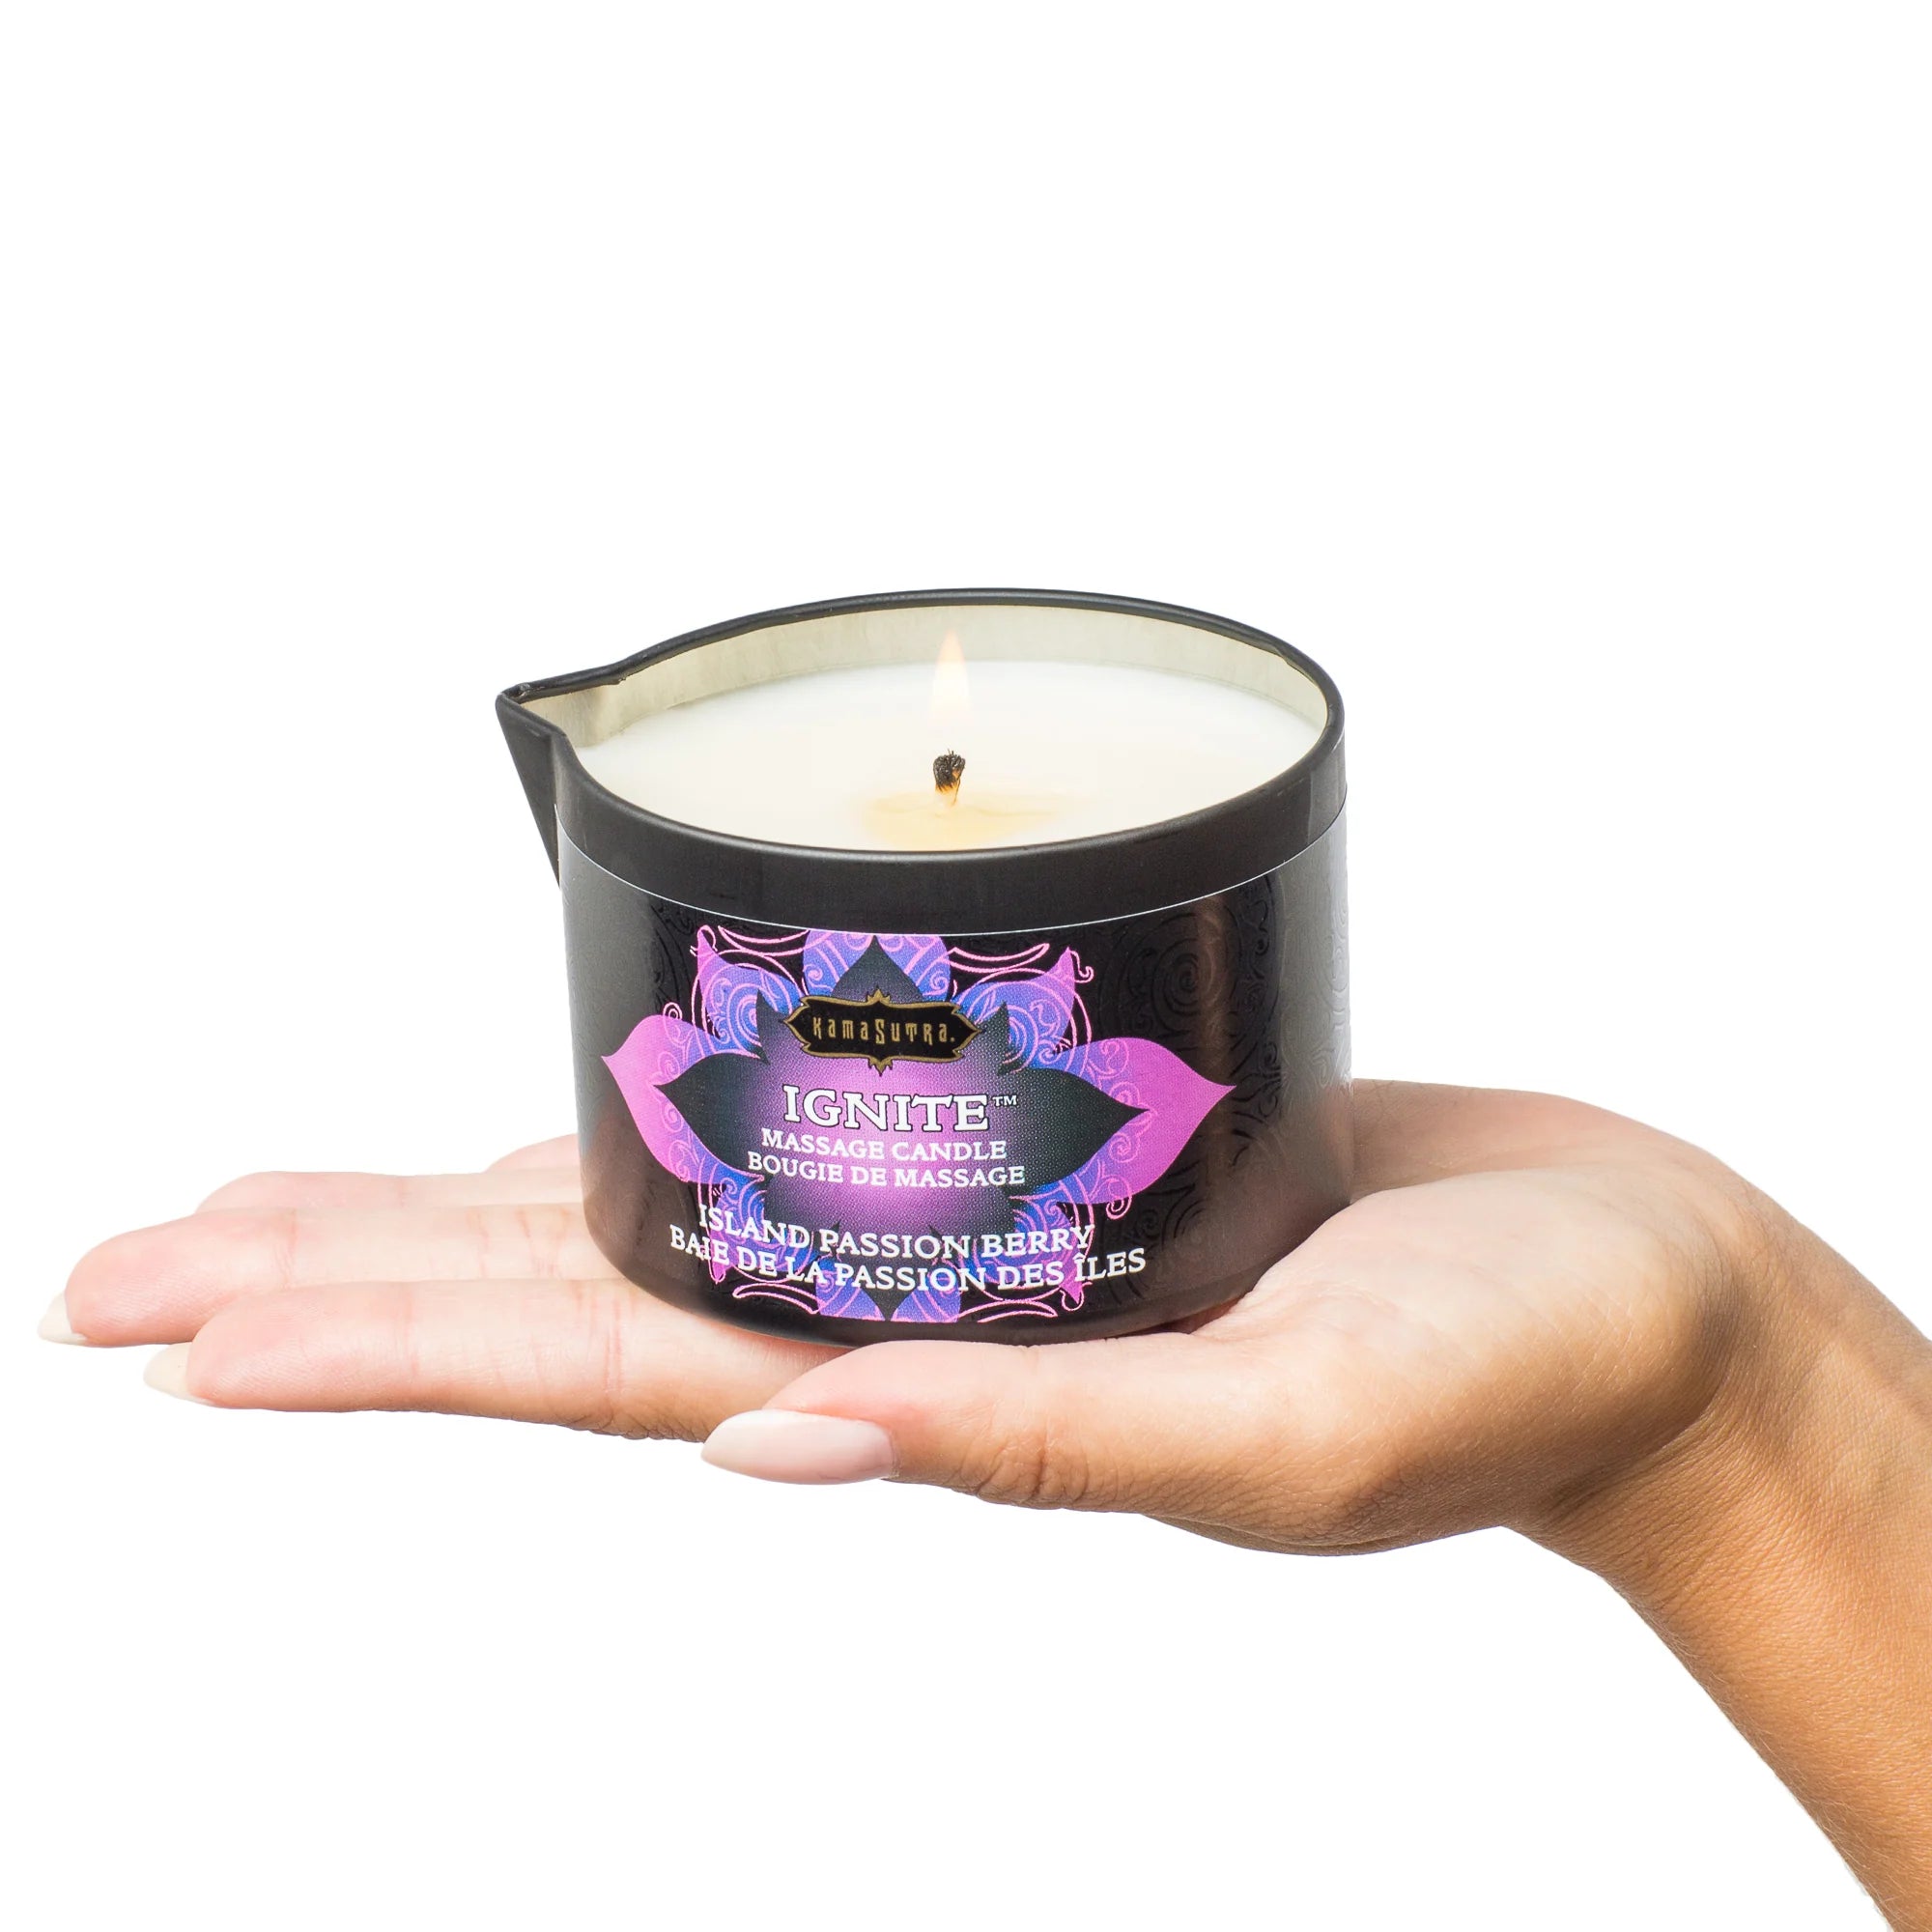 Kama Sutra® Ignite Massage Oil Candle Island Passion Berry - Rolik®